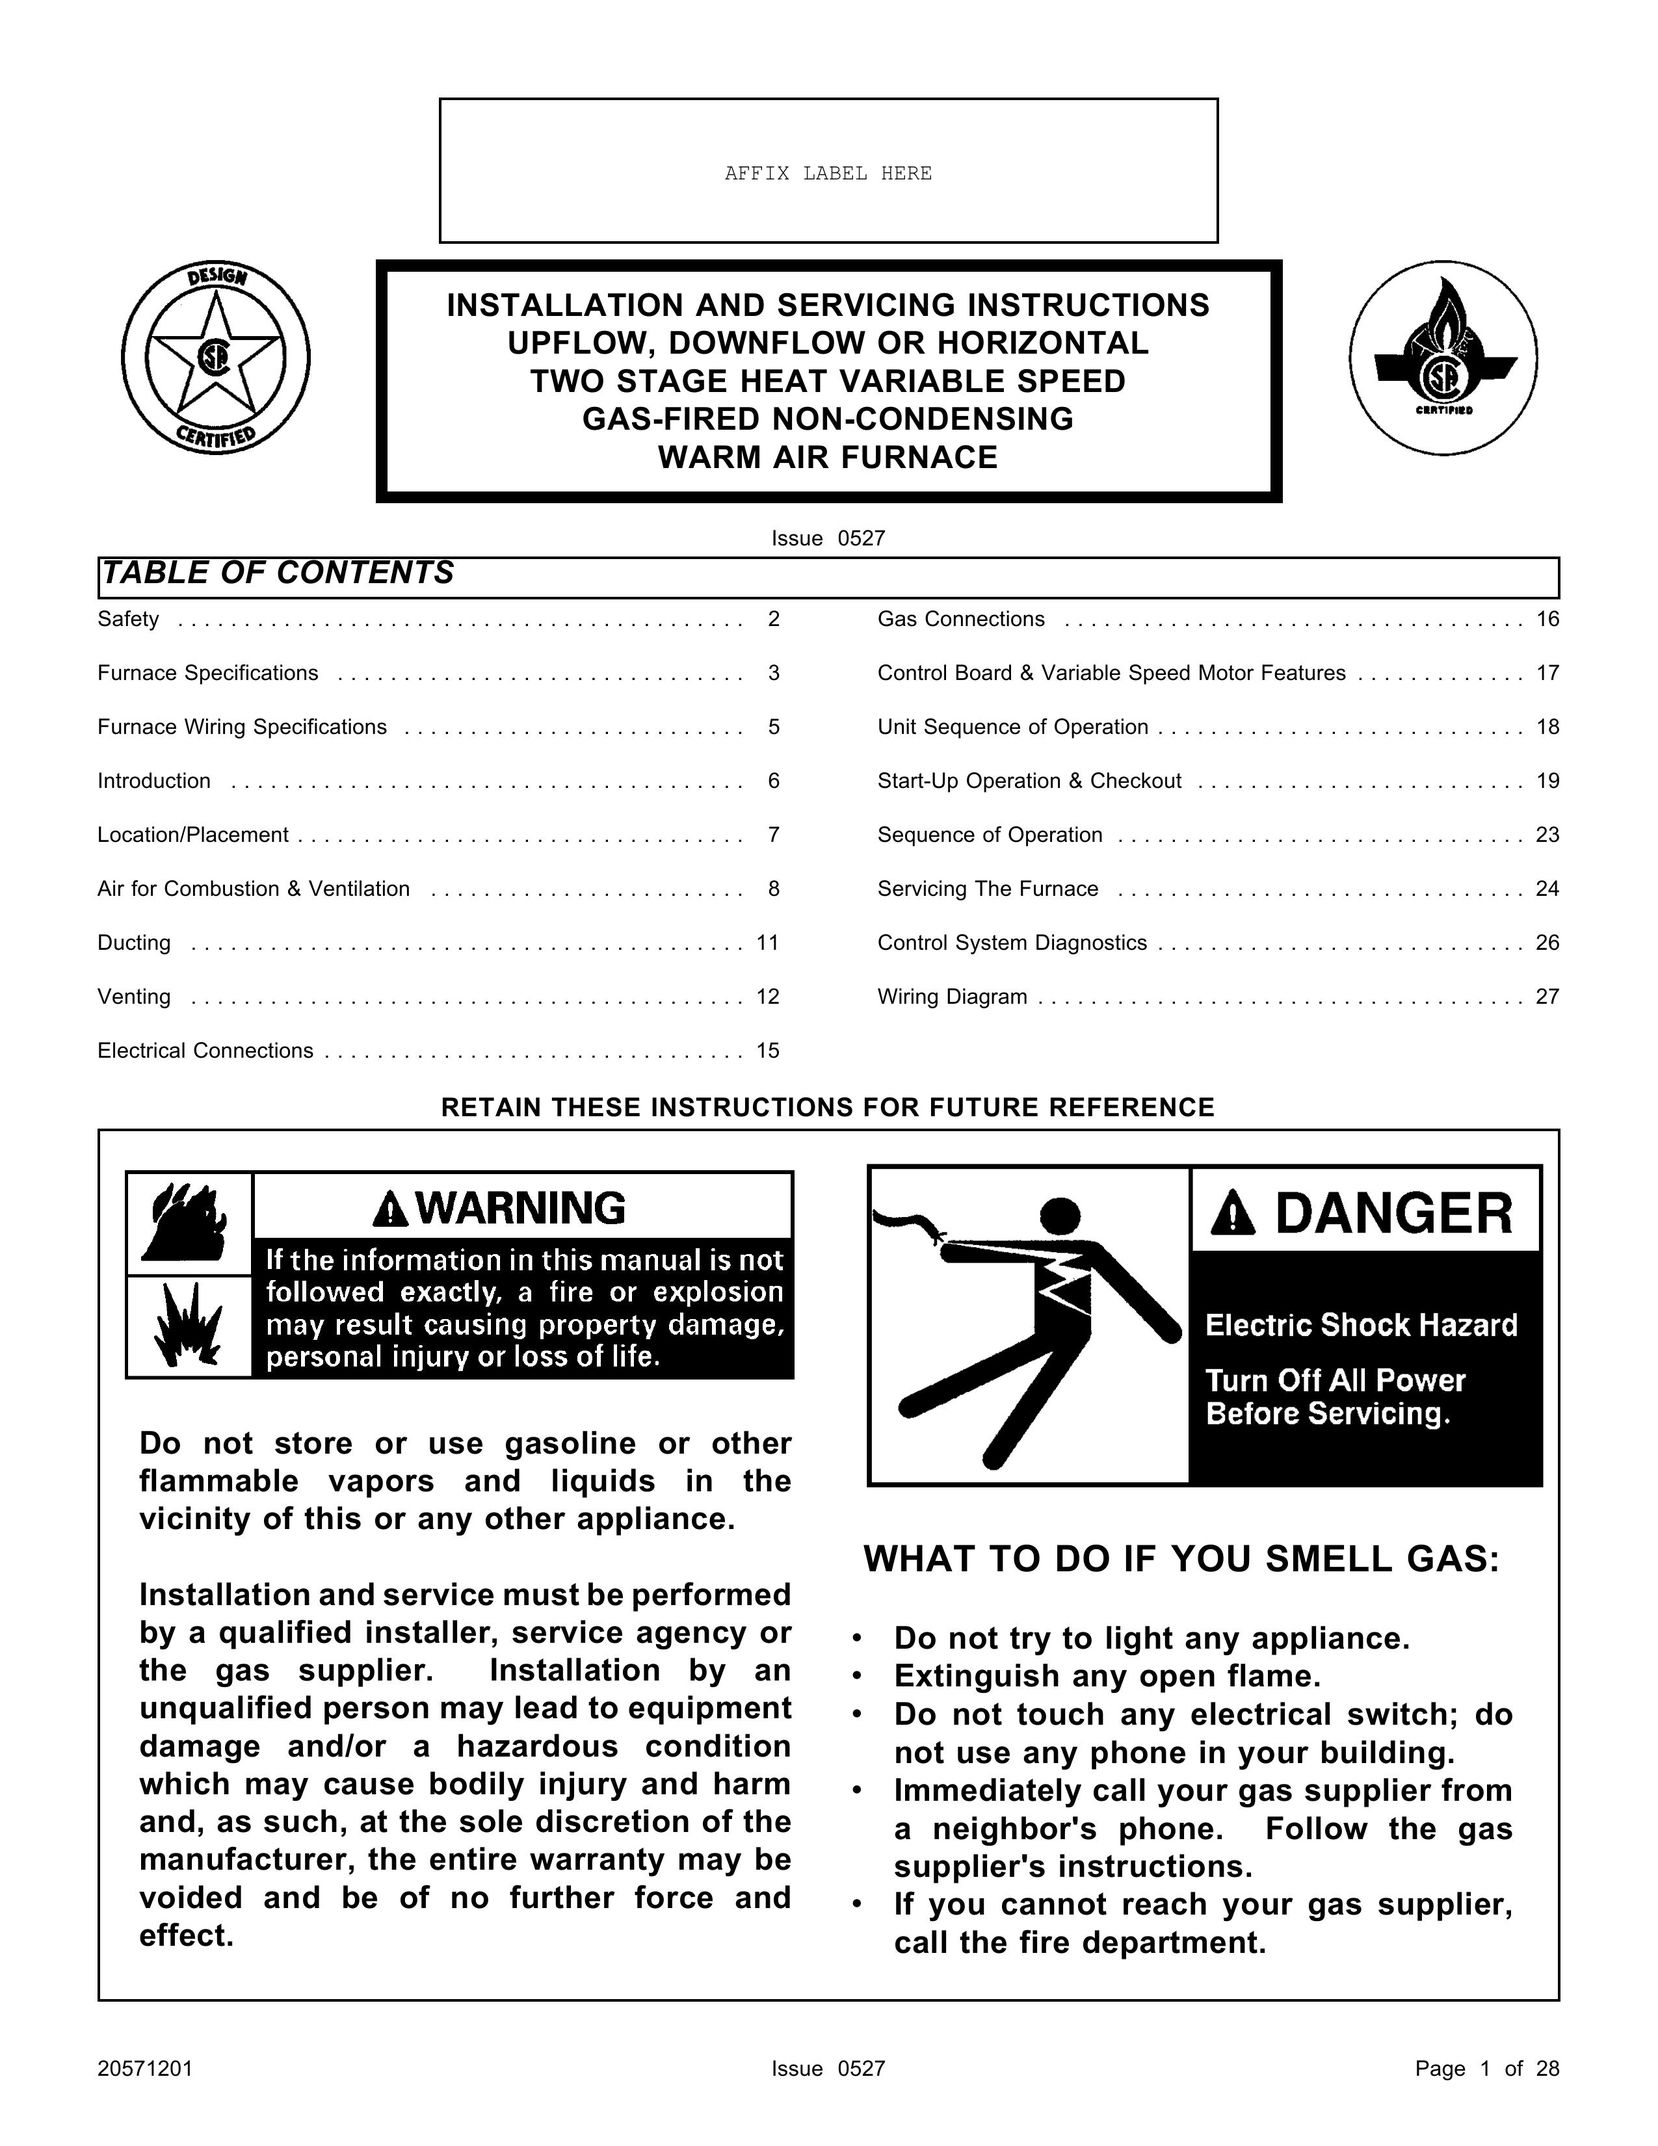 Allied Air Enterprises Upflow Furnace User Manual